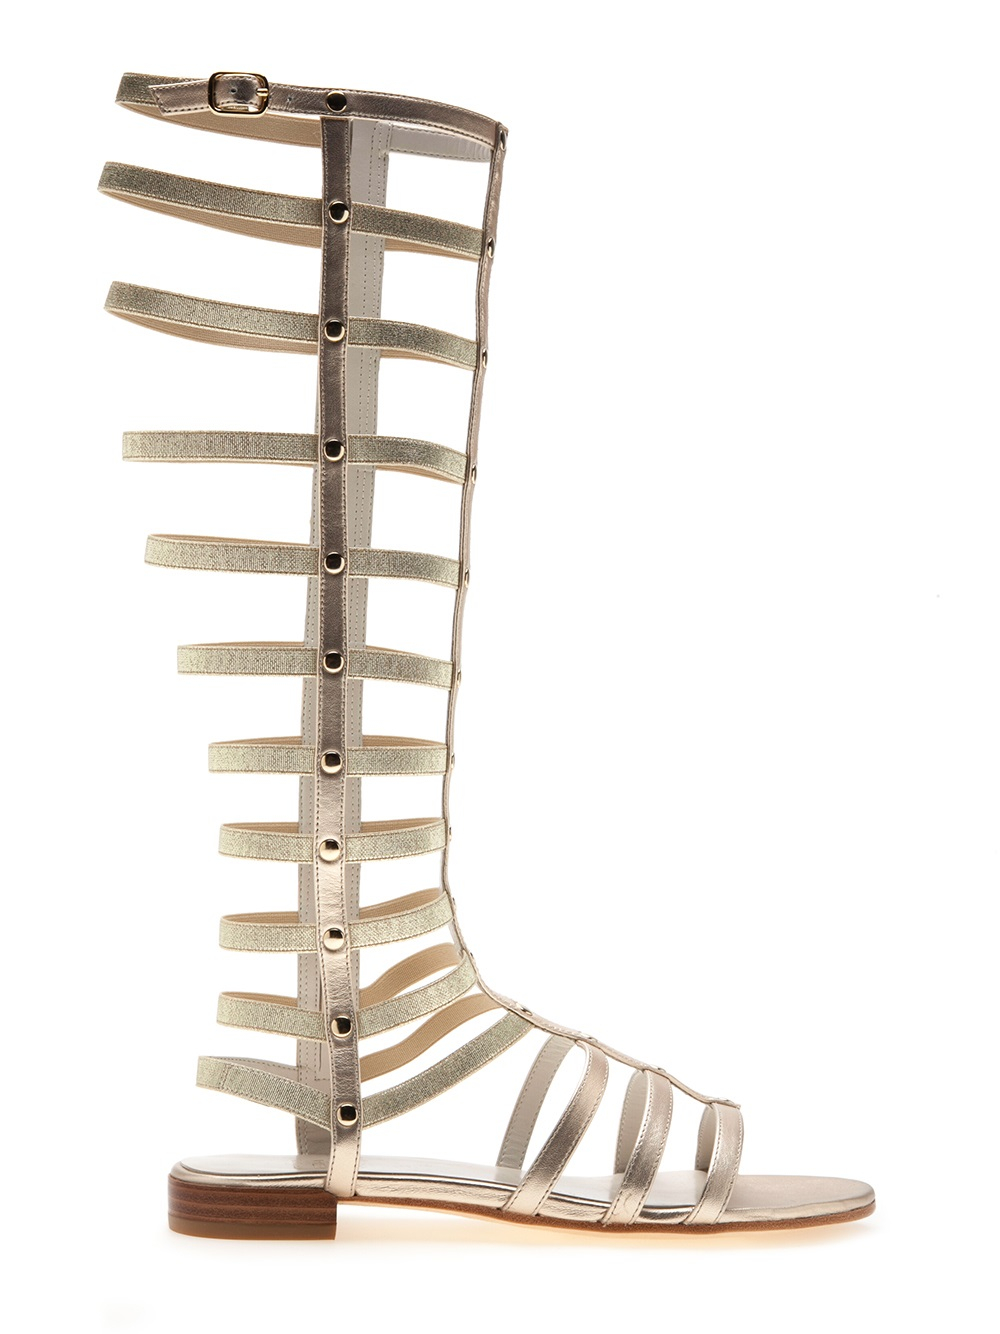 Lyst - Stuart Weitzman 'gladiator' Sandals in Metallic